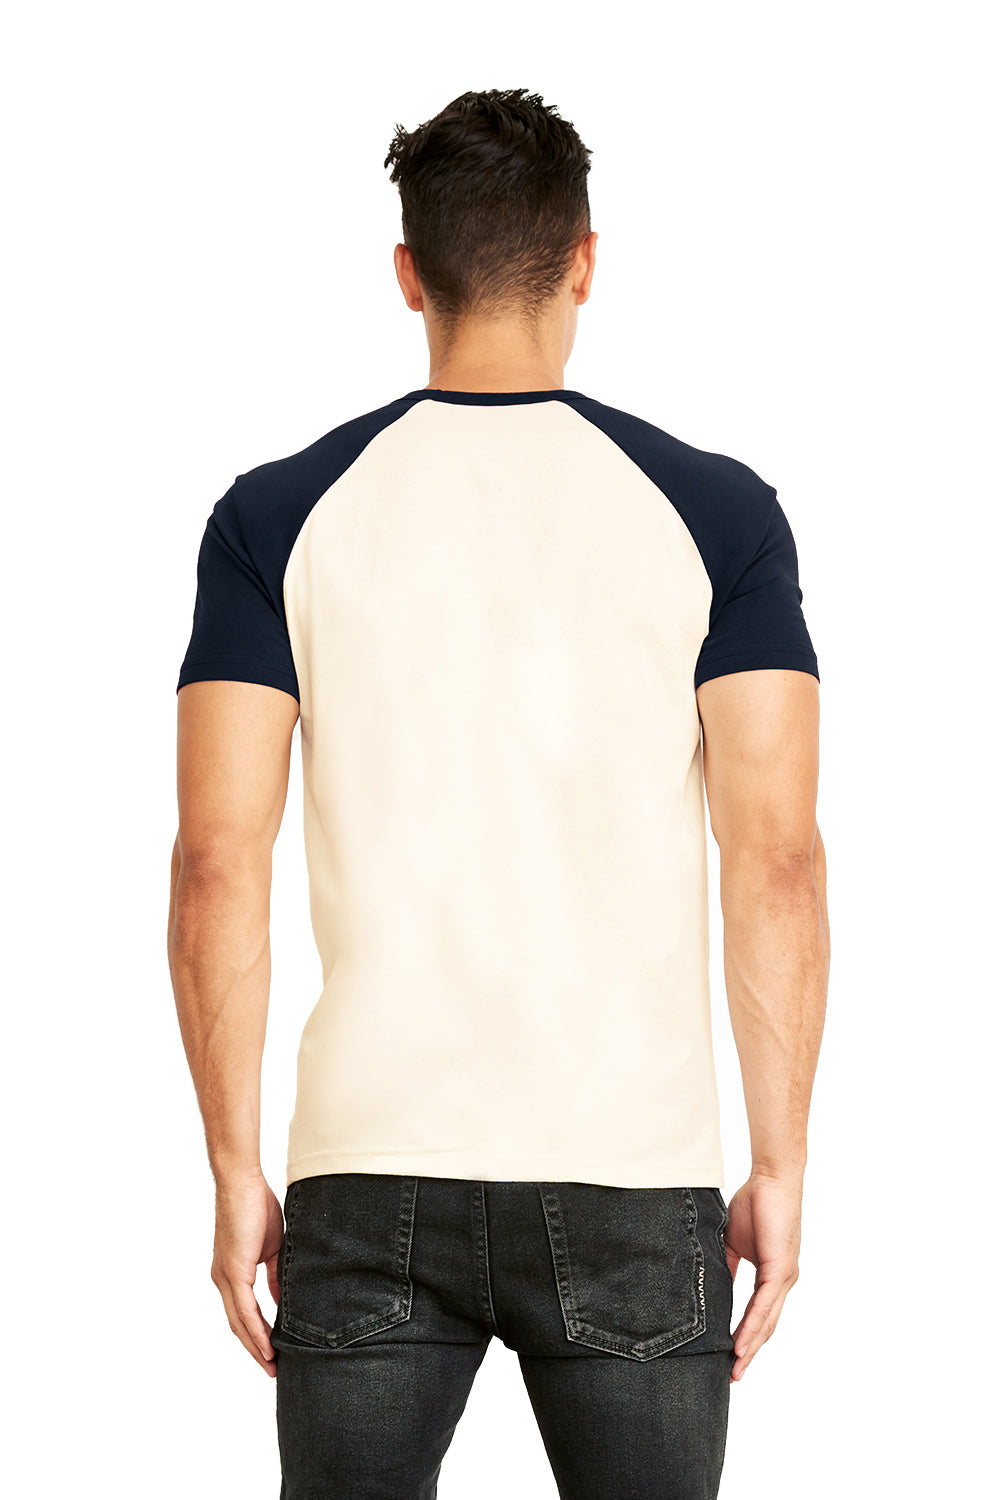 Next Level N3650 Mens Fine Jersey Short Sleeve Crewneck T-Shirt Navy Blue/Natural Back